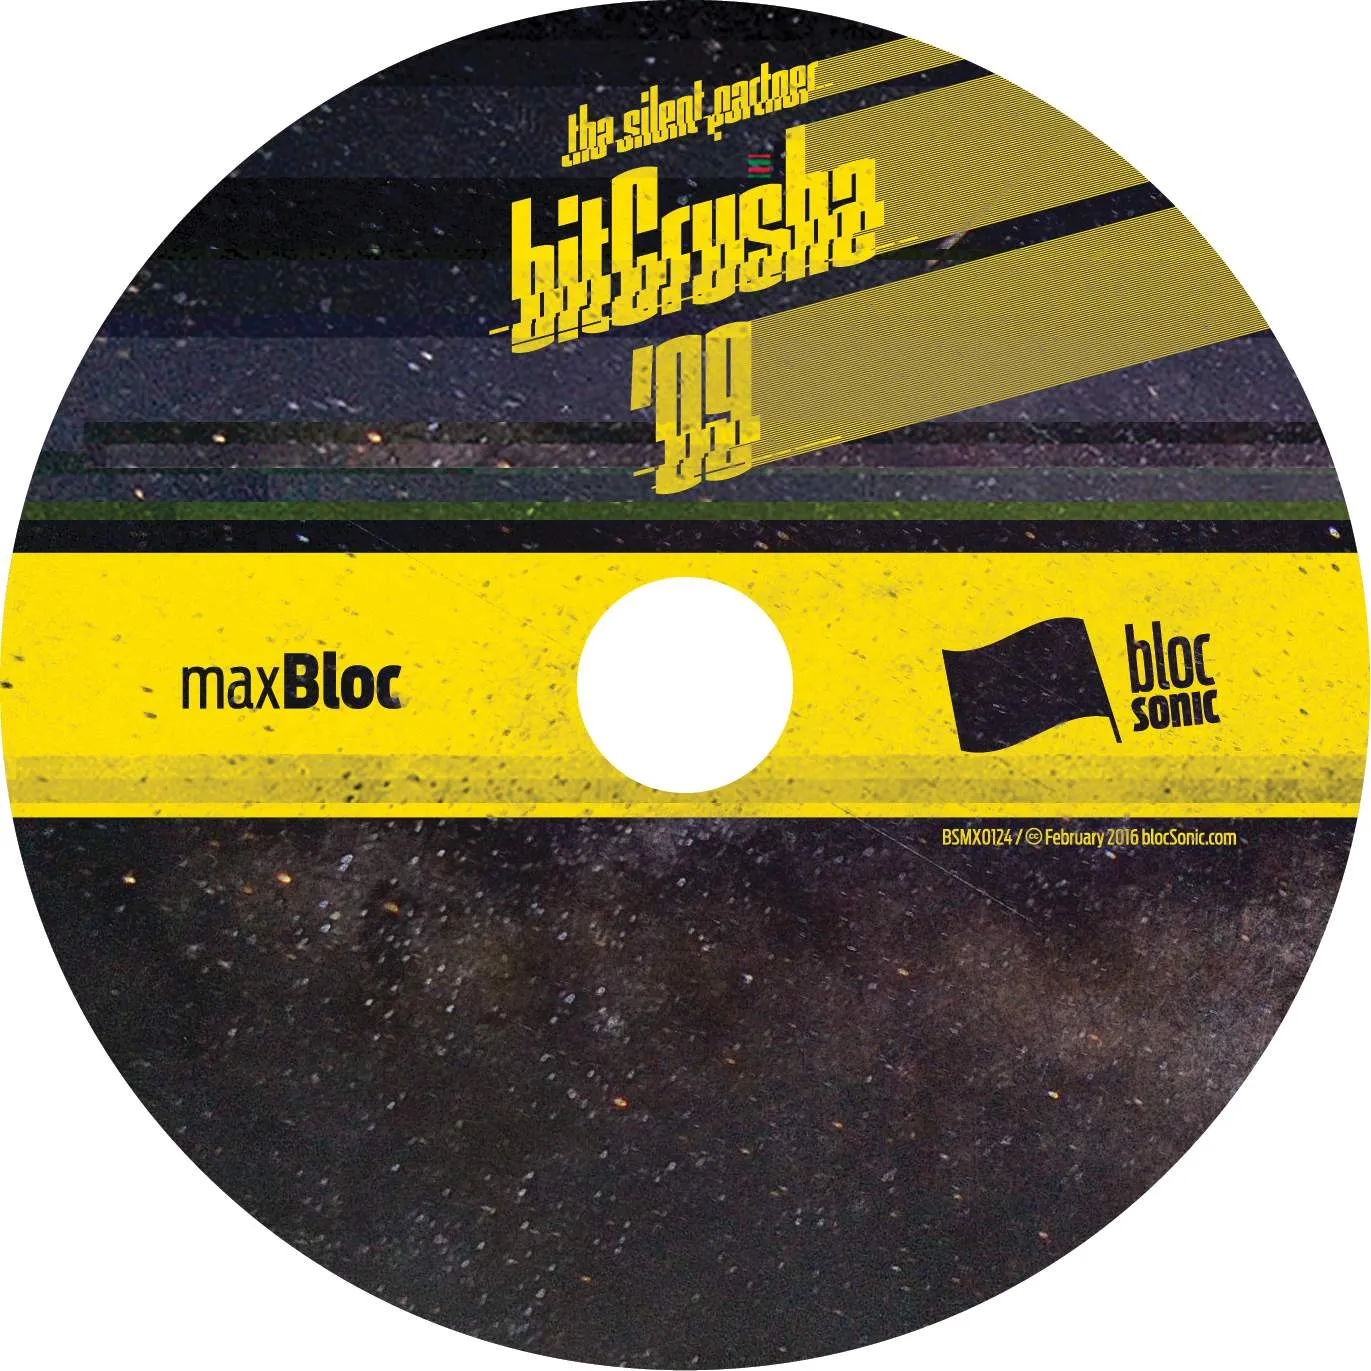 Album disc for “bitCrusha '09” by Tha Silent Partner